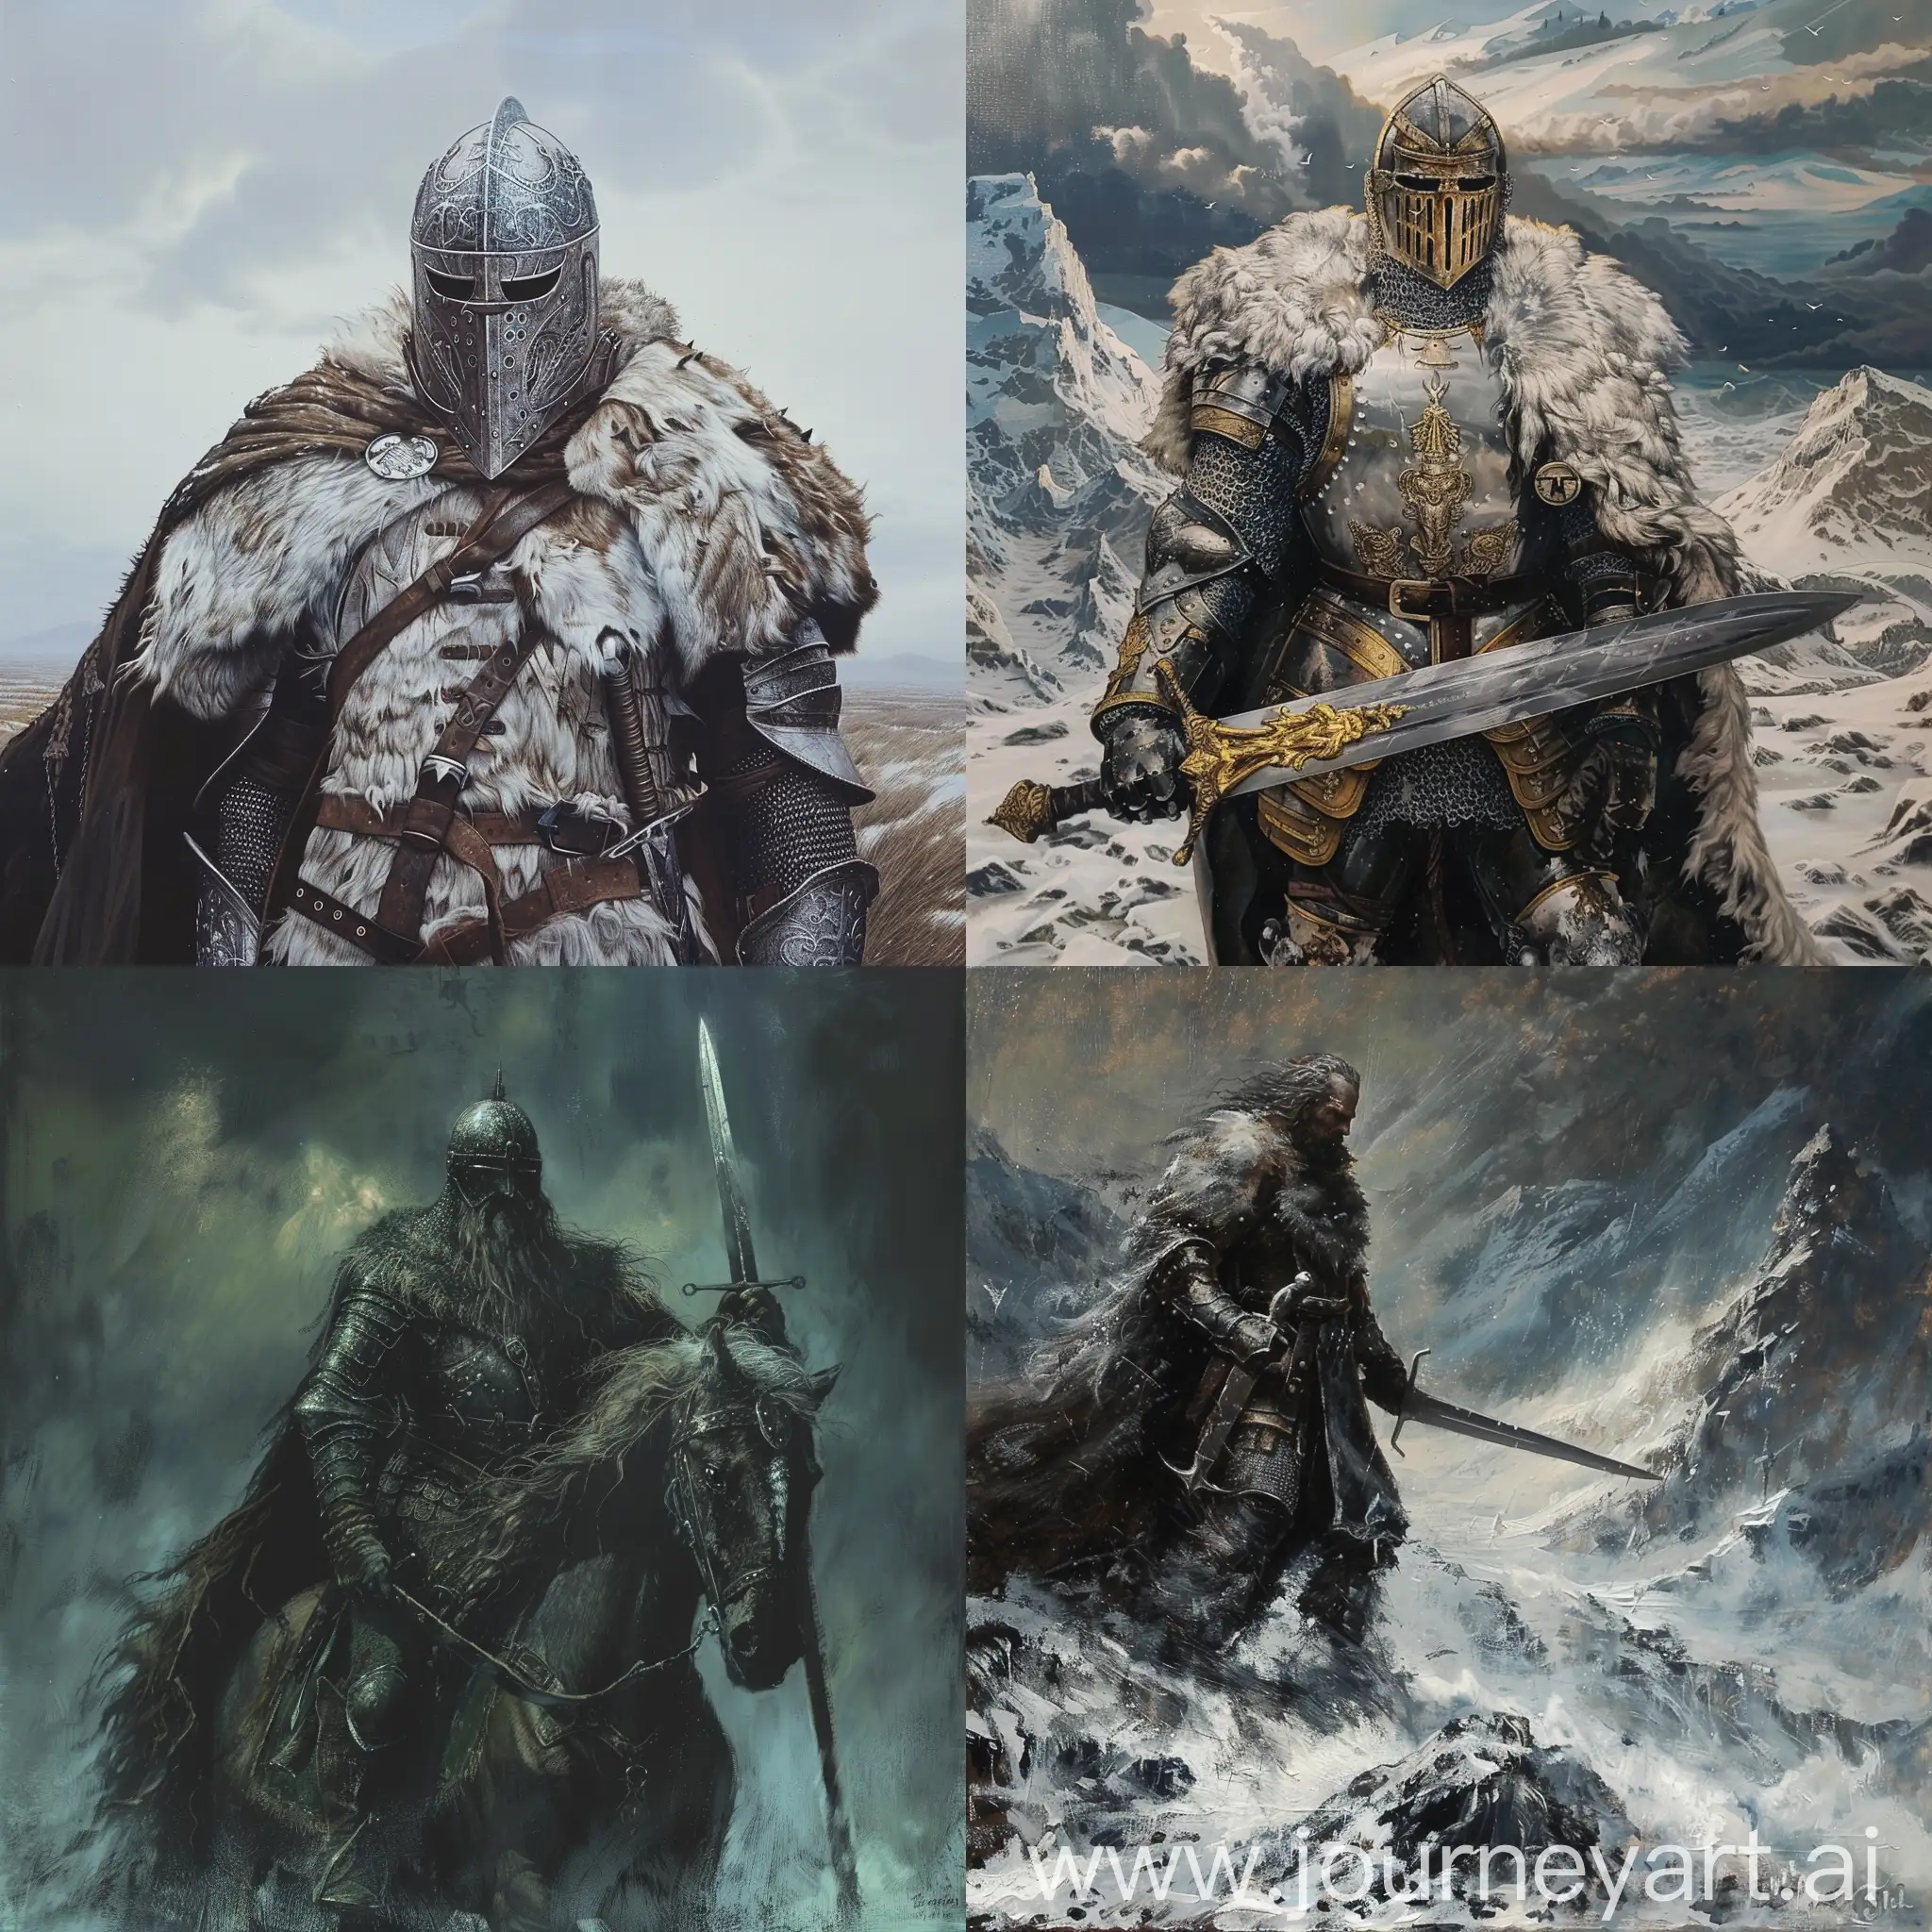 Icelandic-Knight-in-Vibrant-Armor